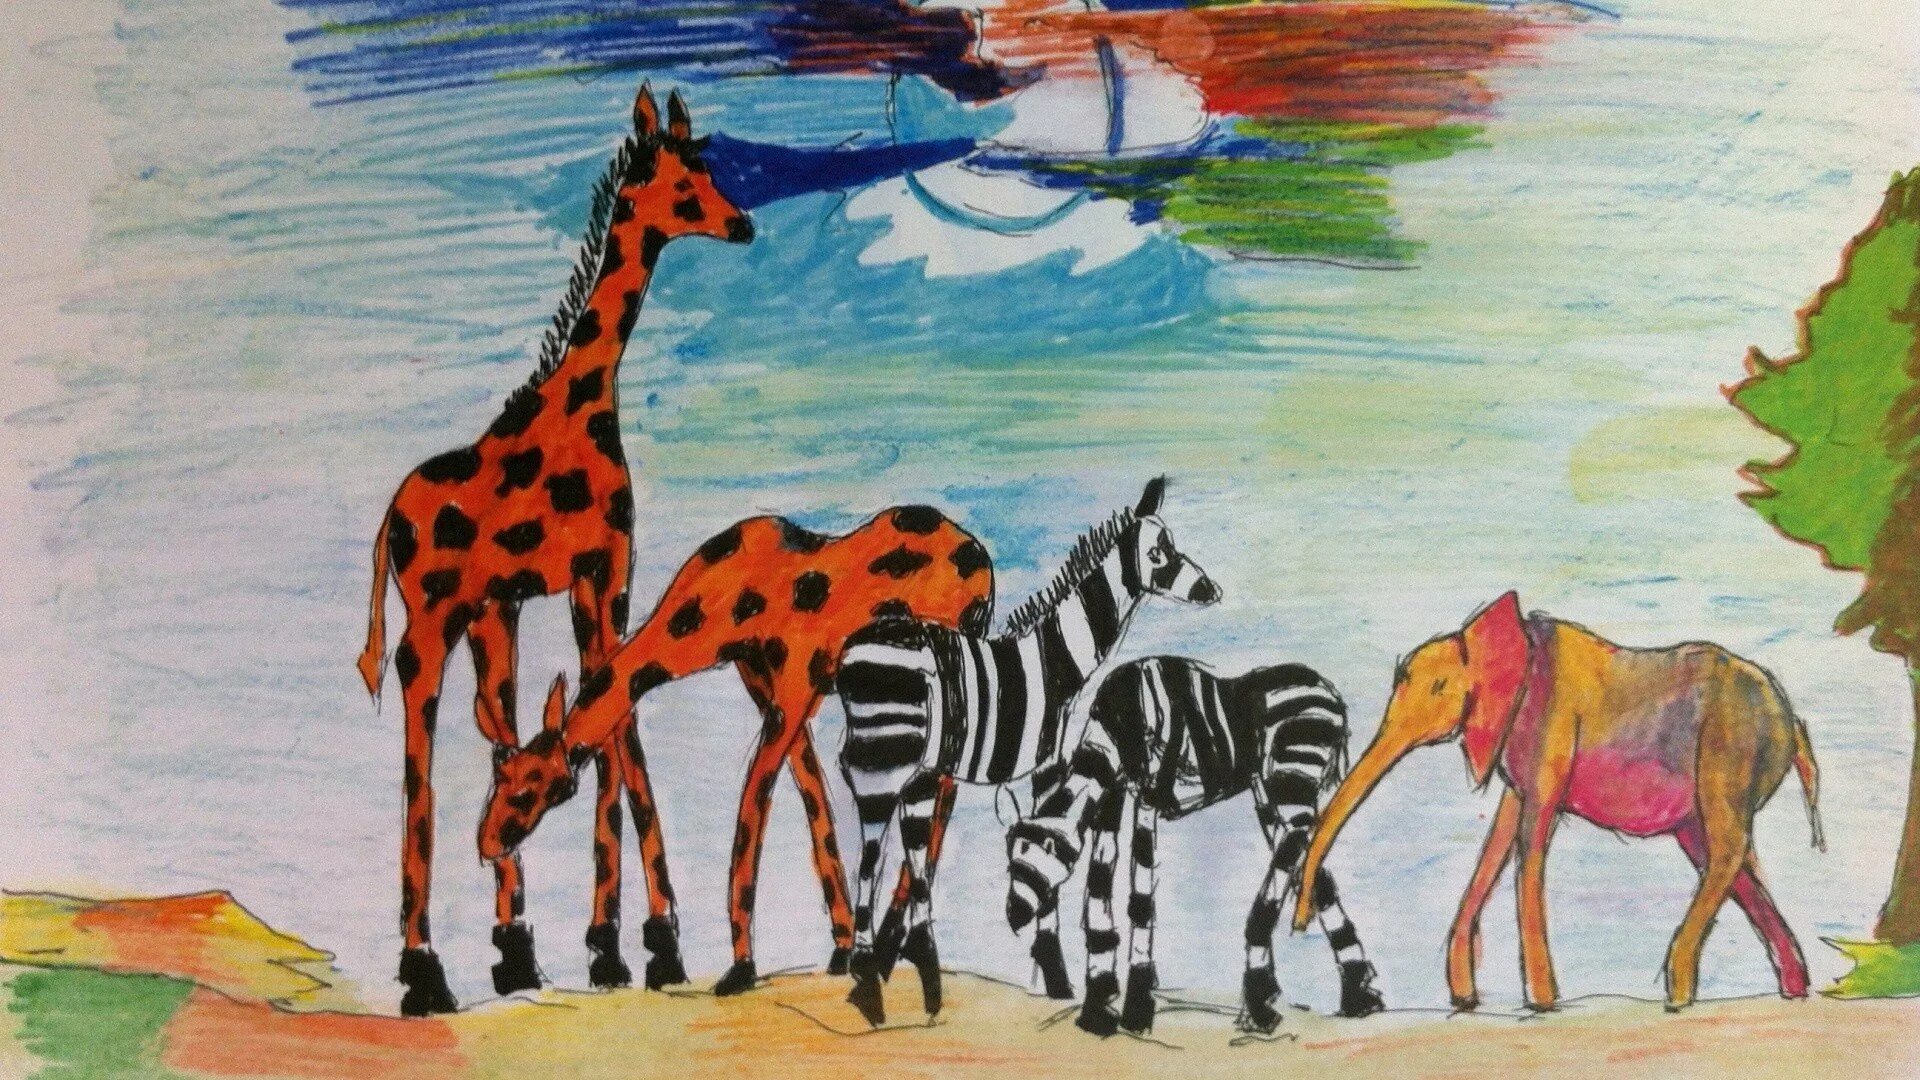 Рисование Африка. Рисование для детей Африка. Путешествие в Африку рисование. Картины в африканском стиле.